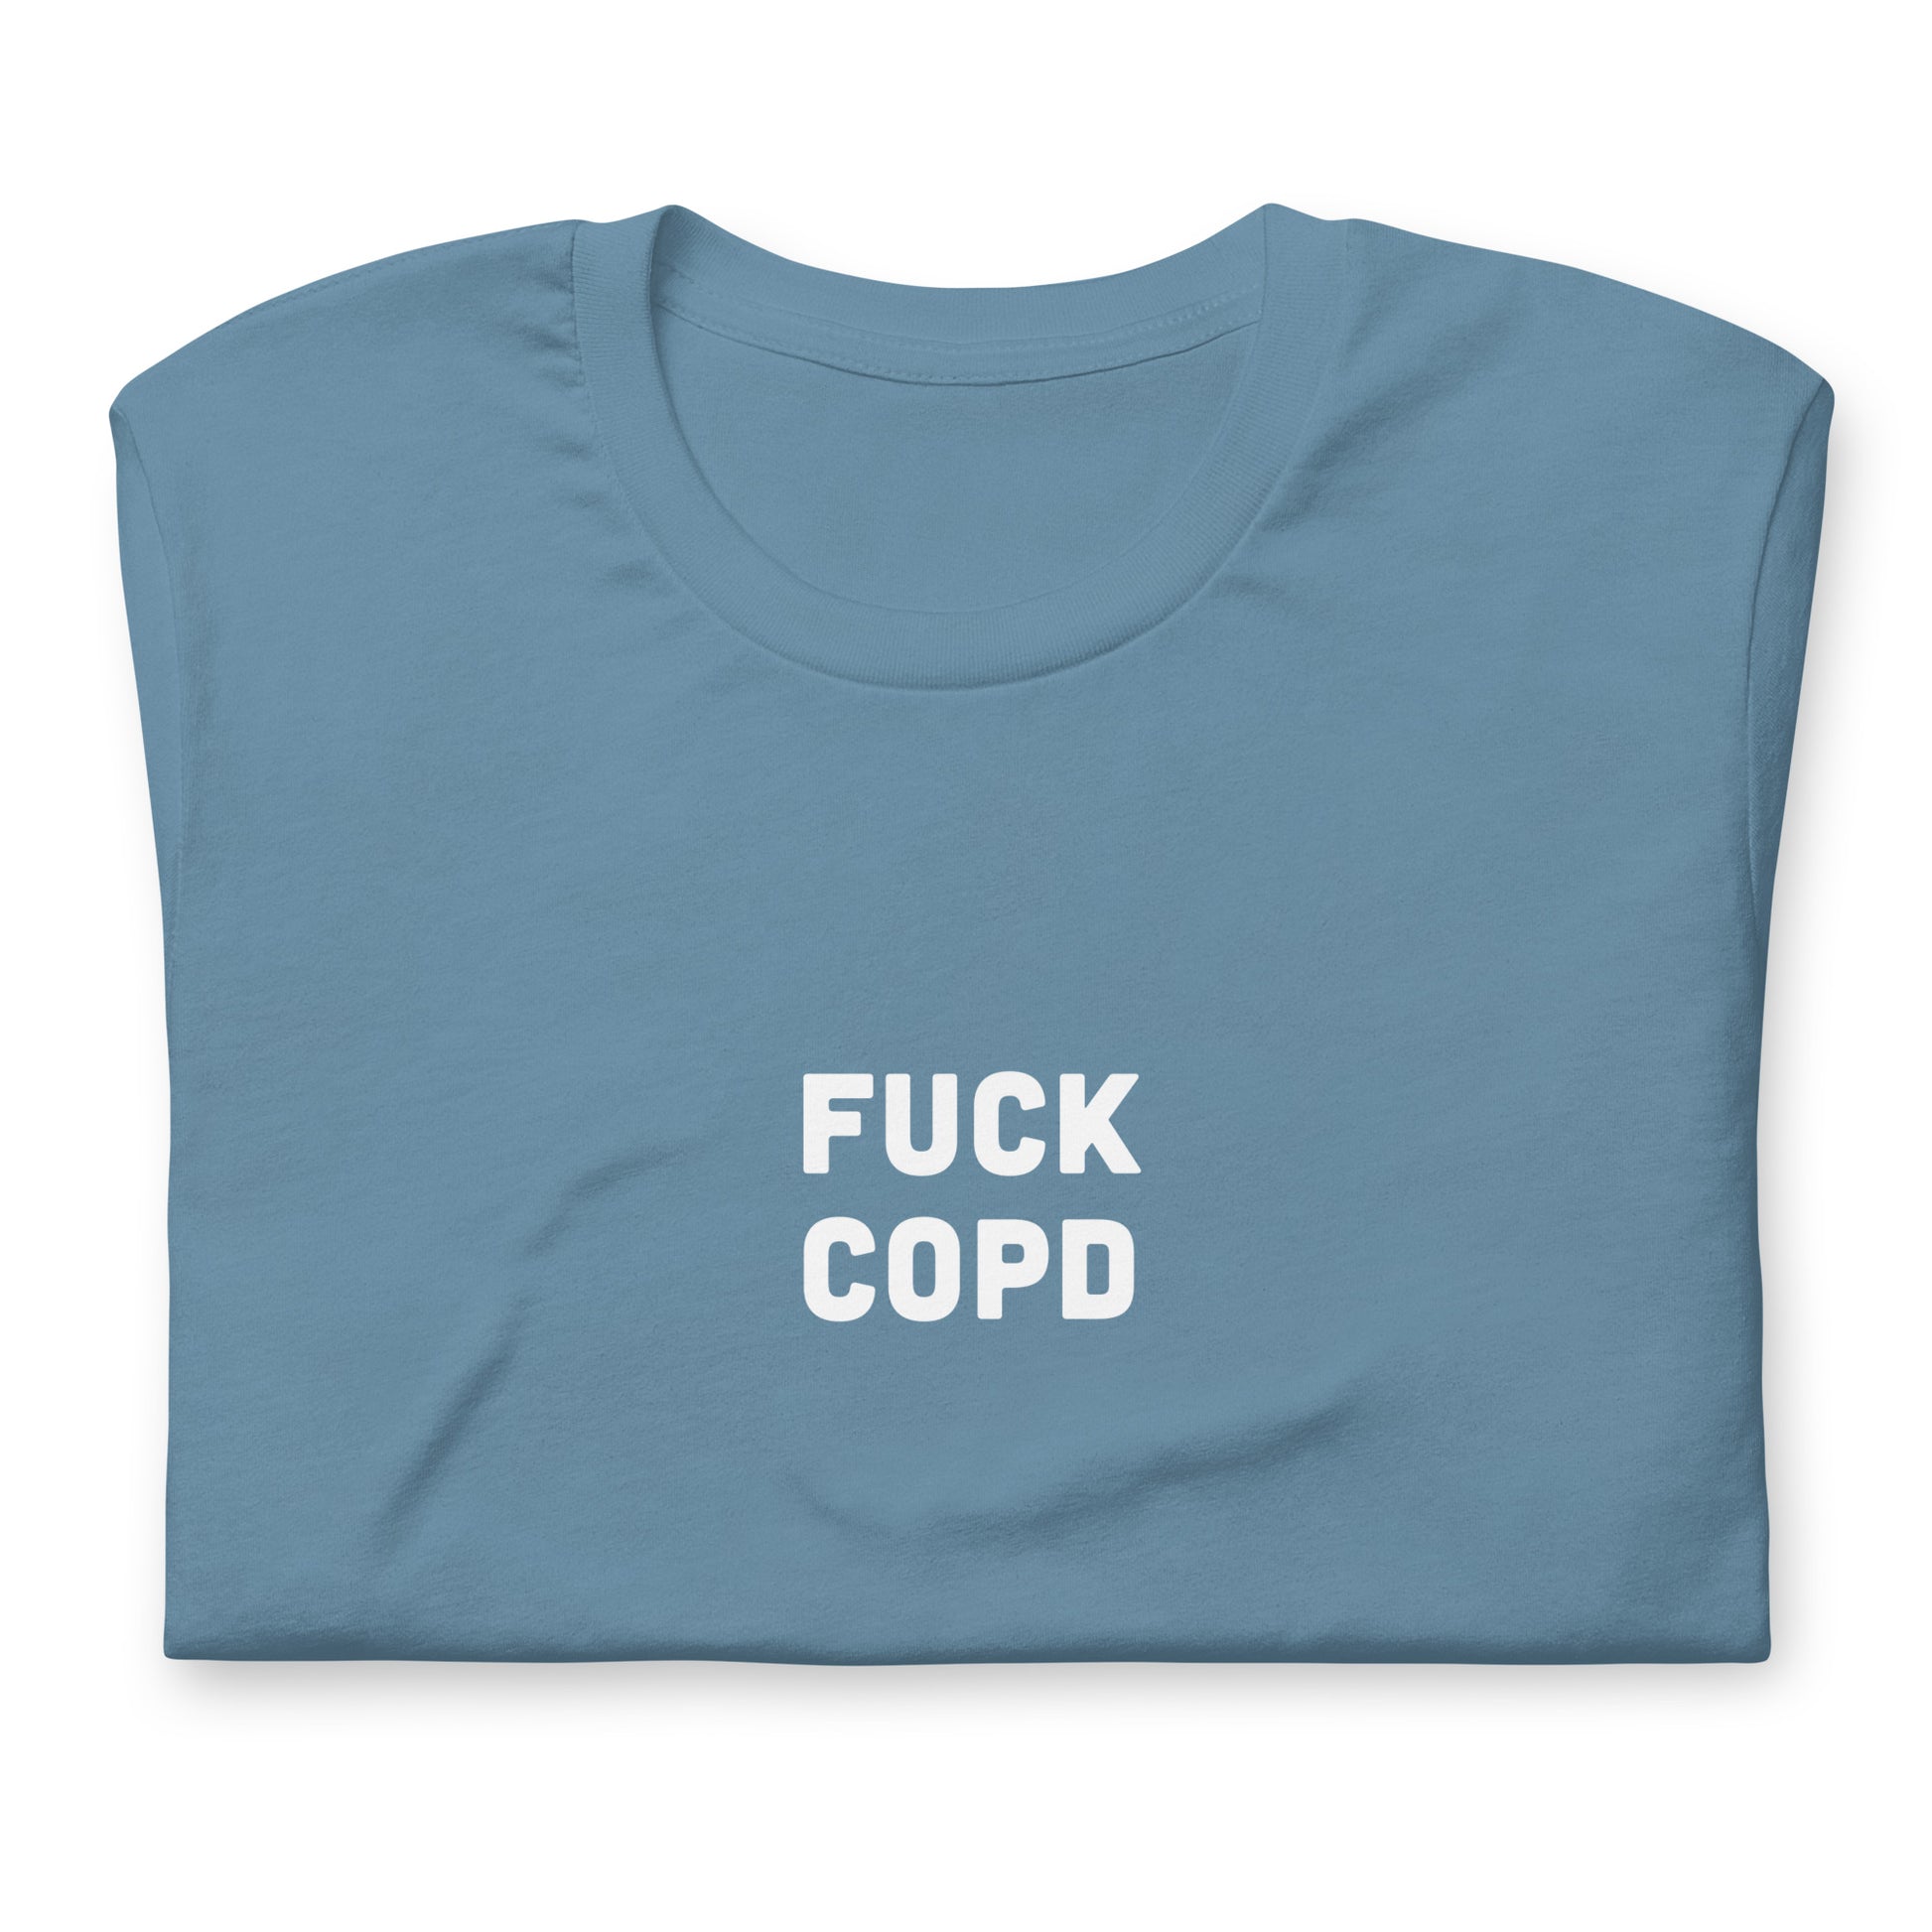 Fuck Copd T-Shirt Size S Color Forest